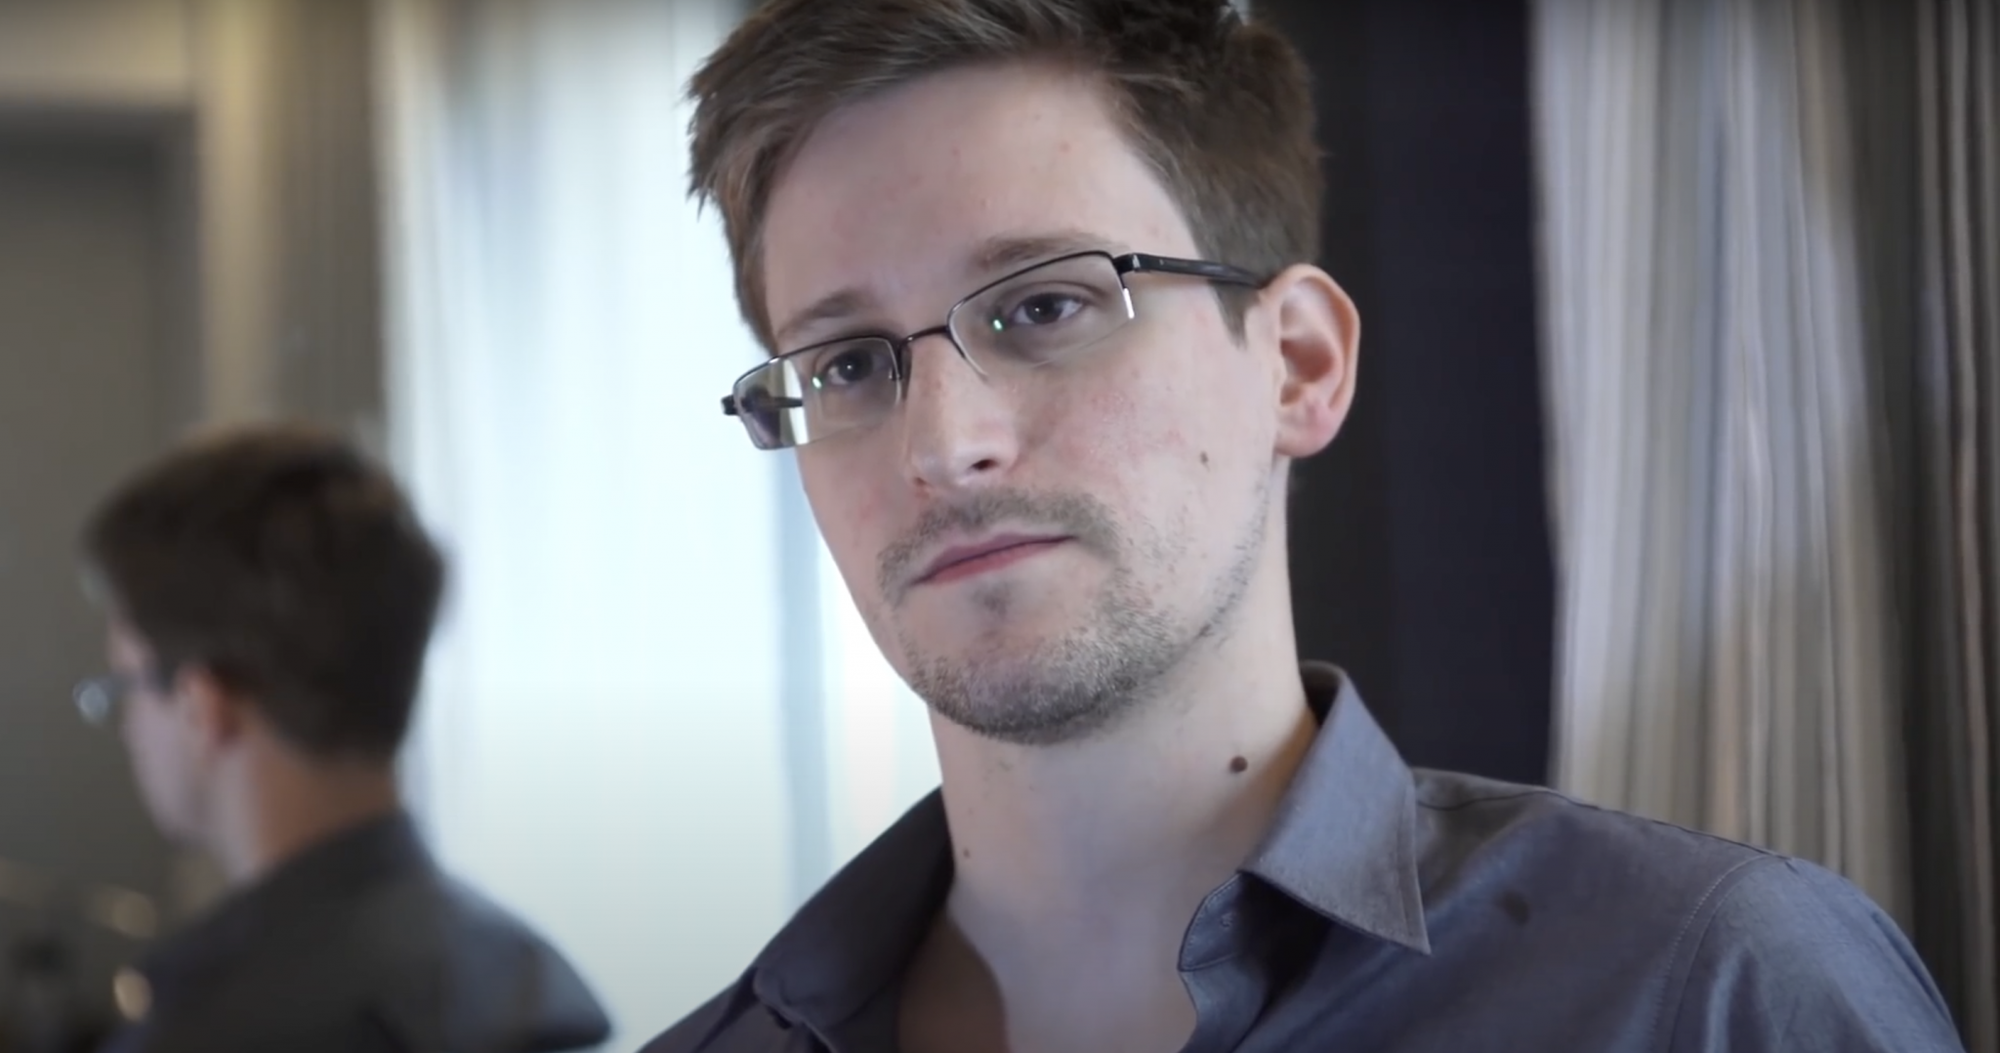 Snowden Russian residence permit, pardon denied